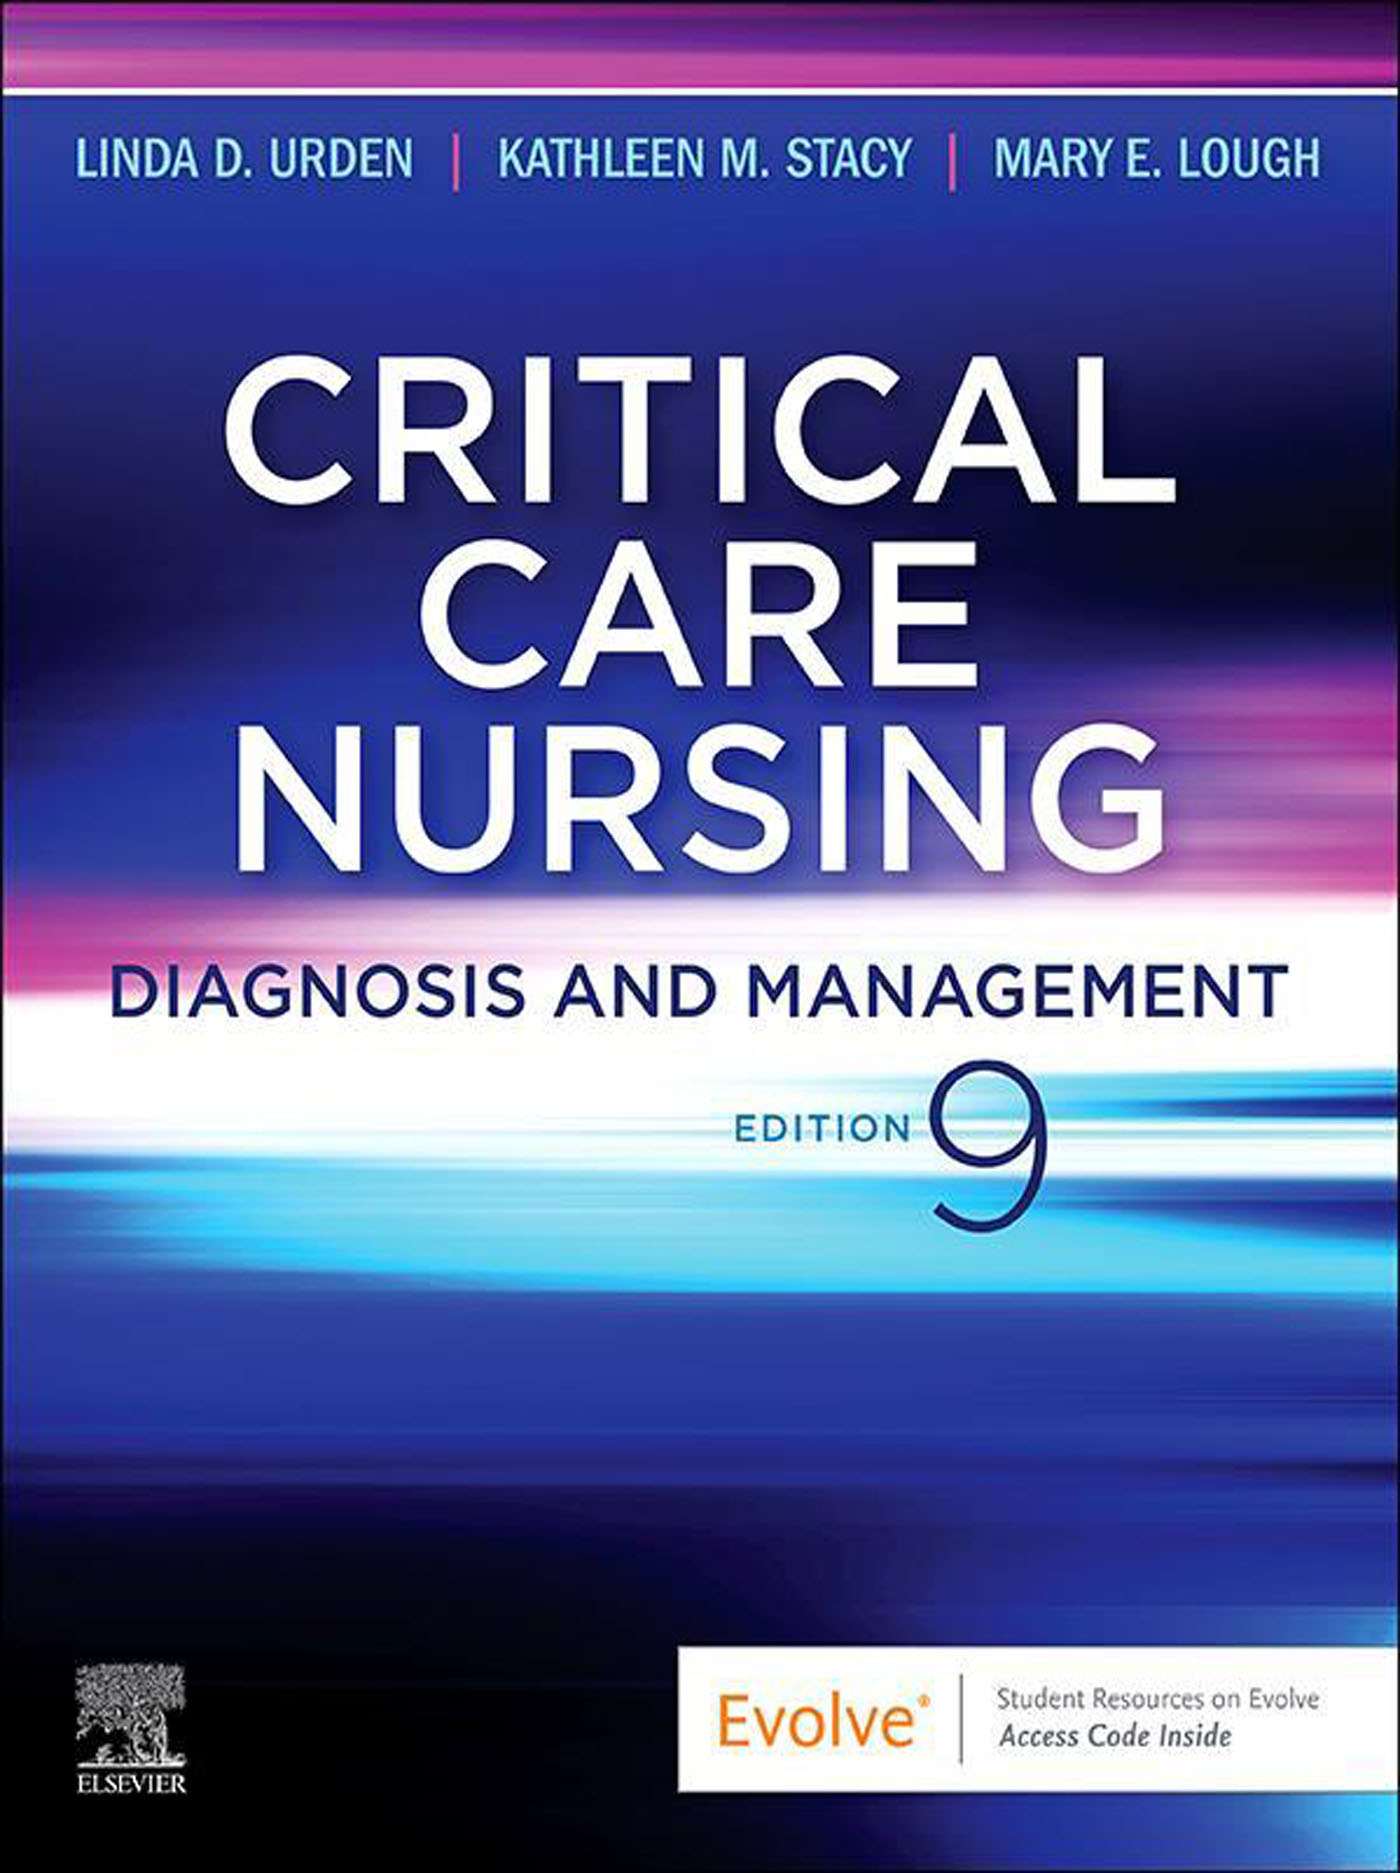 Critical Care Nursing: Diagnosis and Management (9th Edition) – eBook PDF